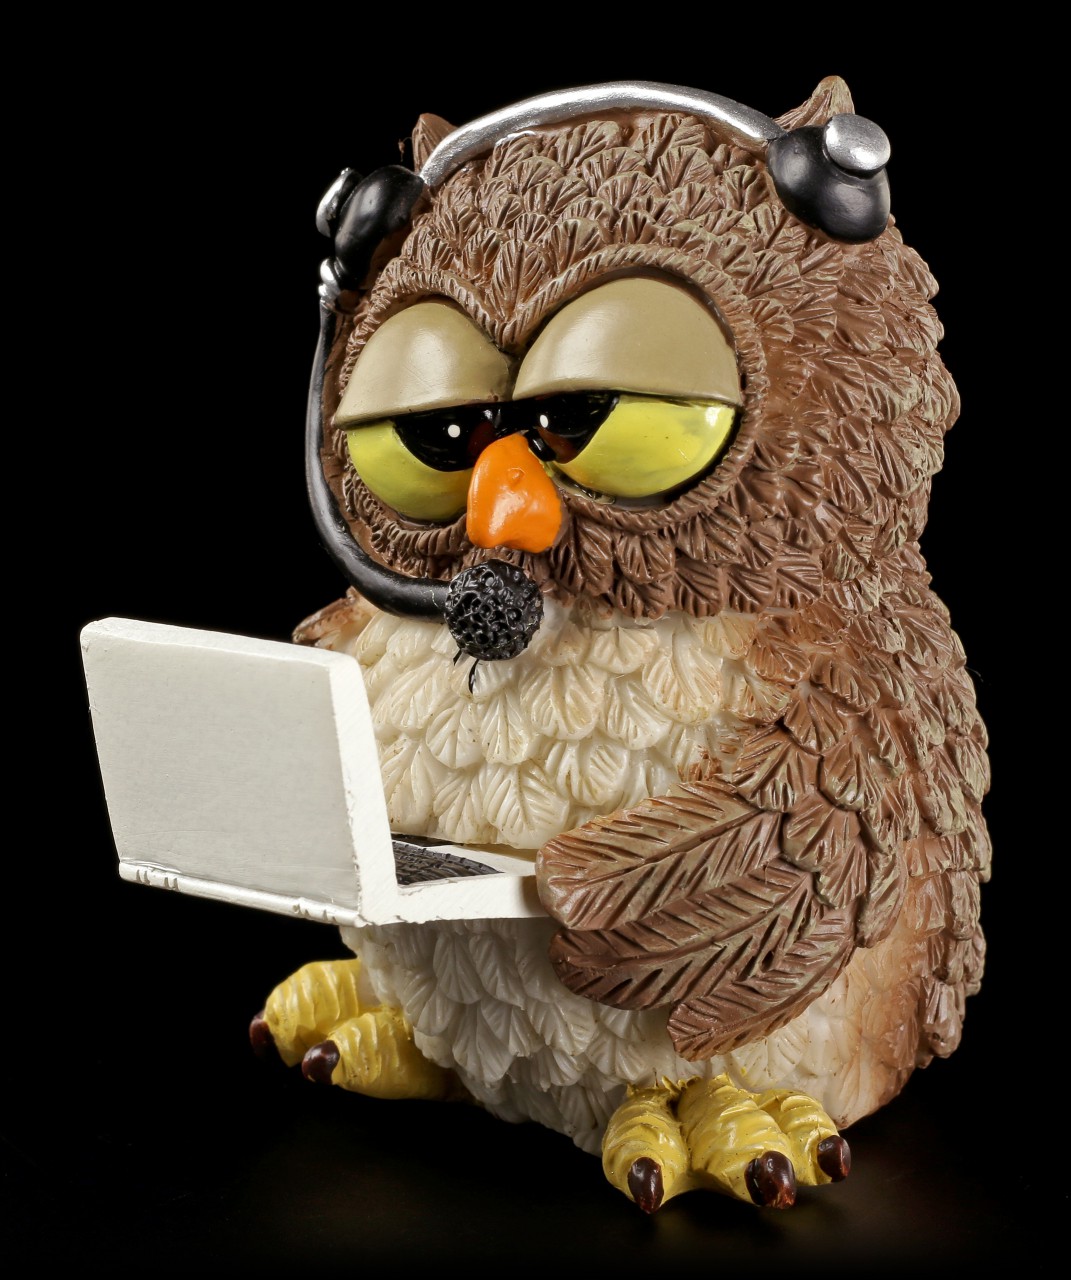 Funny Owl Figurine - "Skype" with Laptop